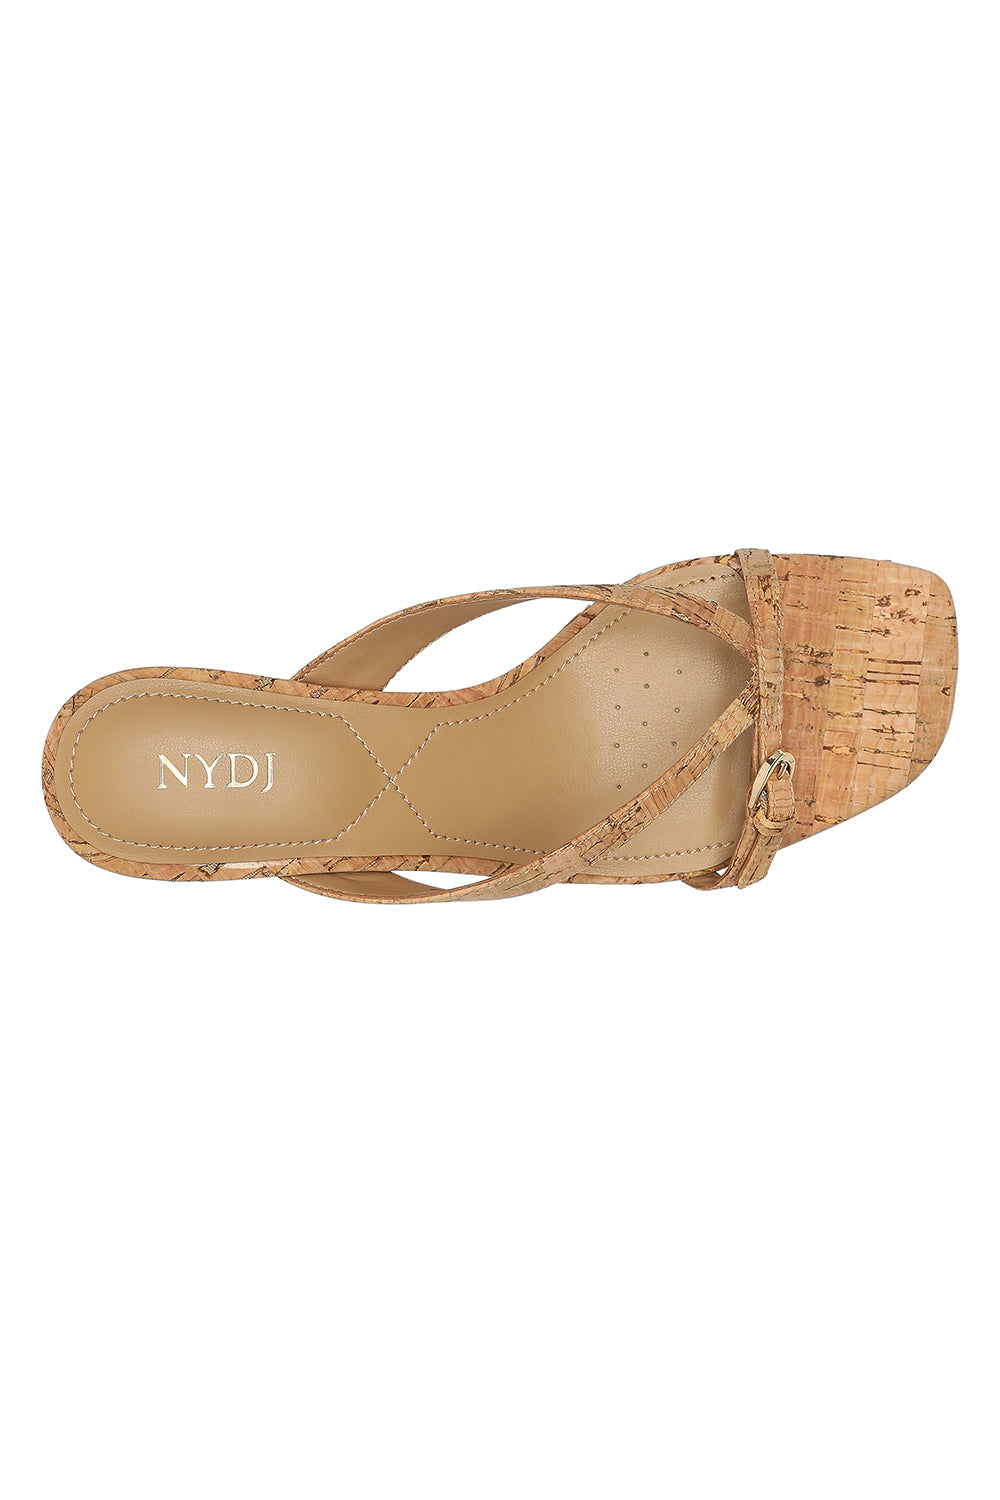 NYDJ Glam Block Heel Sandals In Cork - Natural